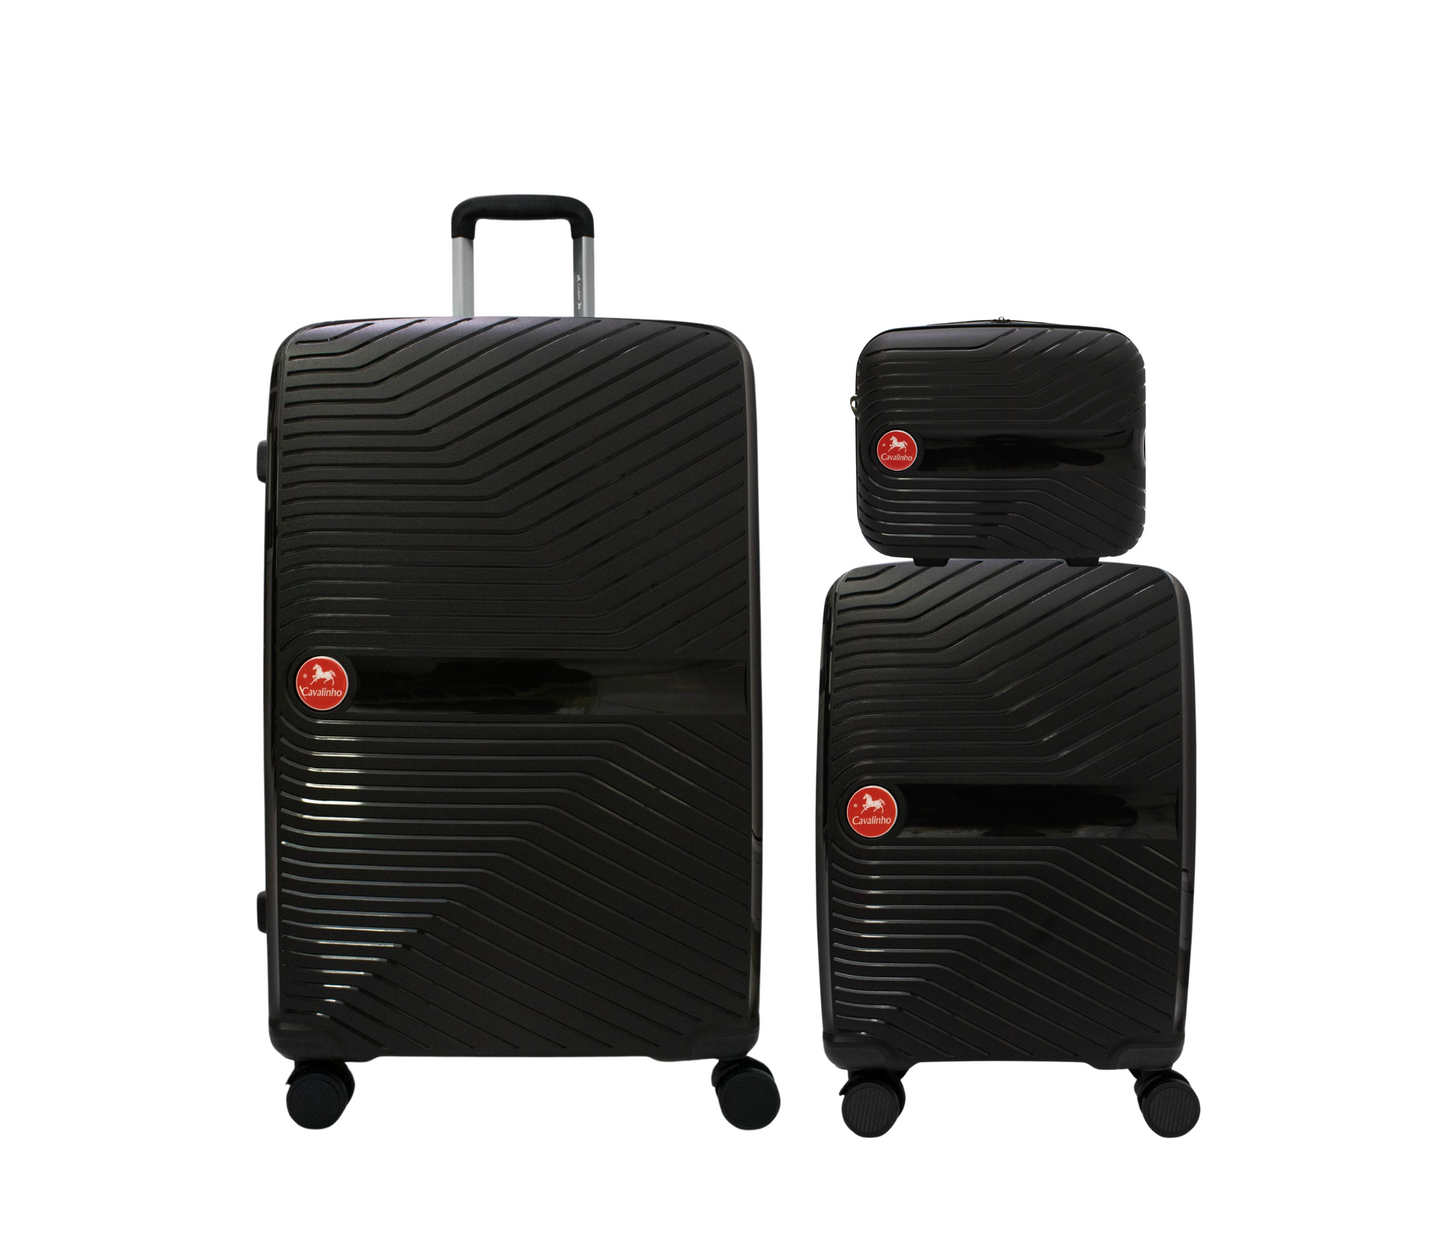 Cavalinho Canada & USA Colorful 3 Piece Luggage Set (15", 19" & 28") - Black Black Black - 68020004.010101.S151928._1